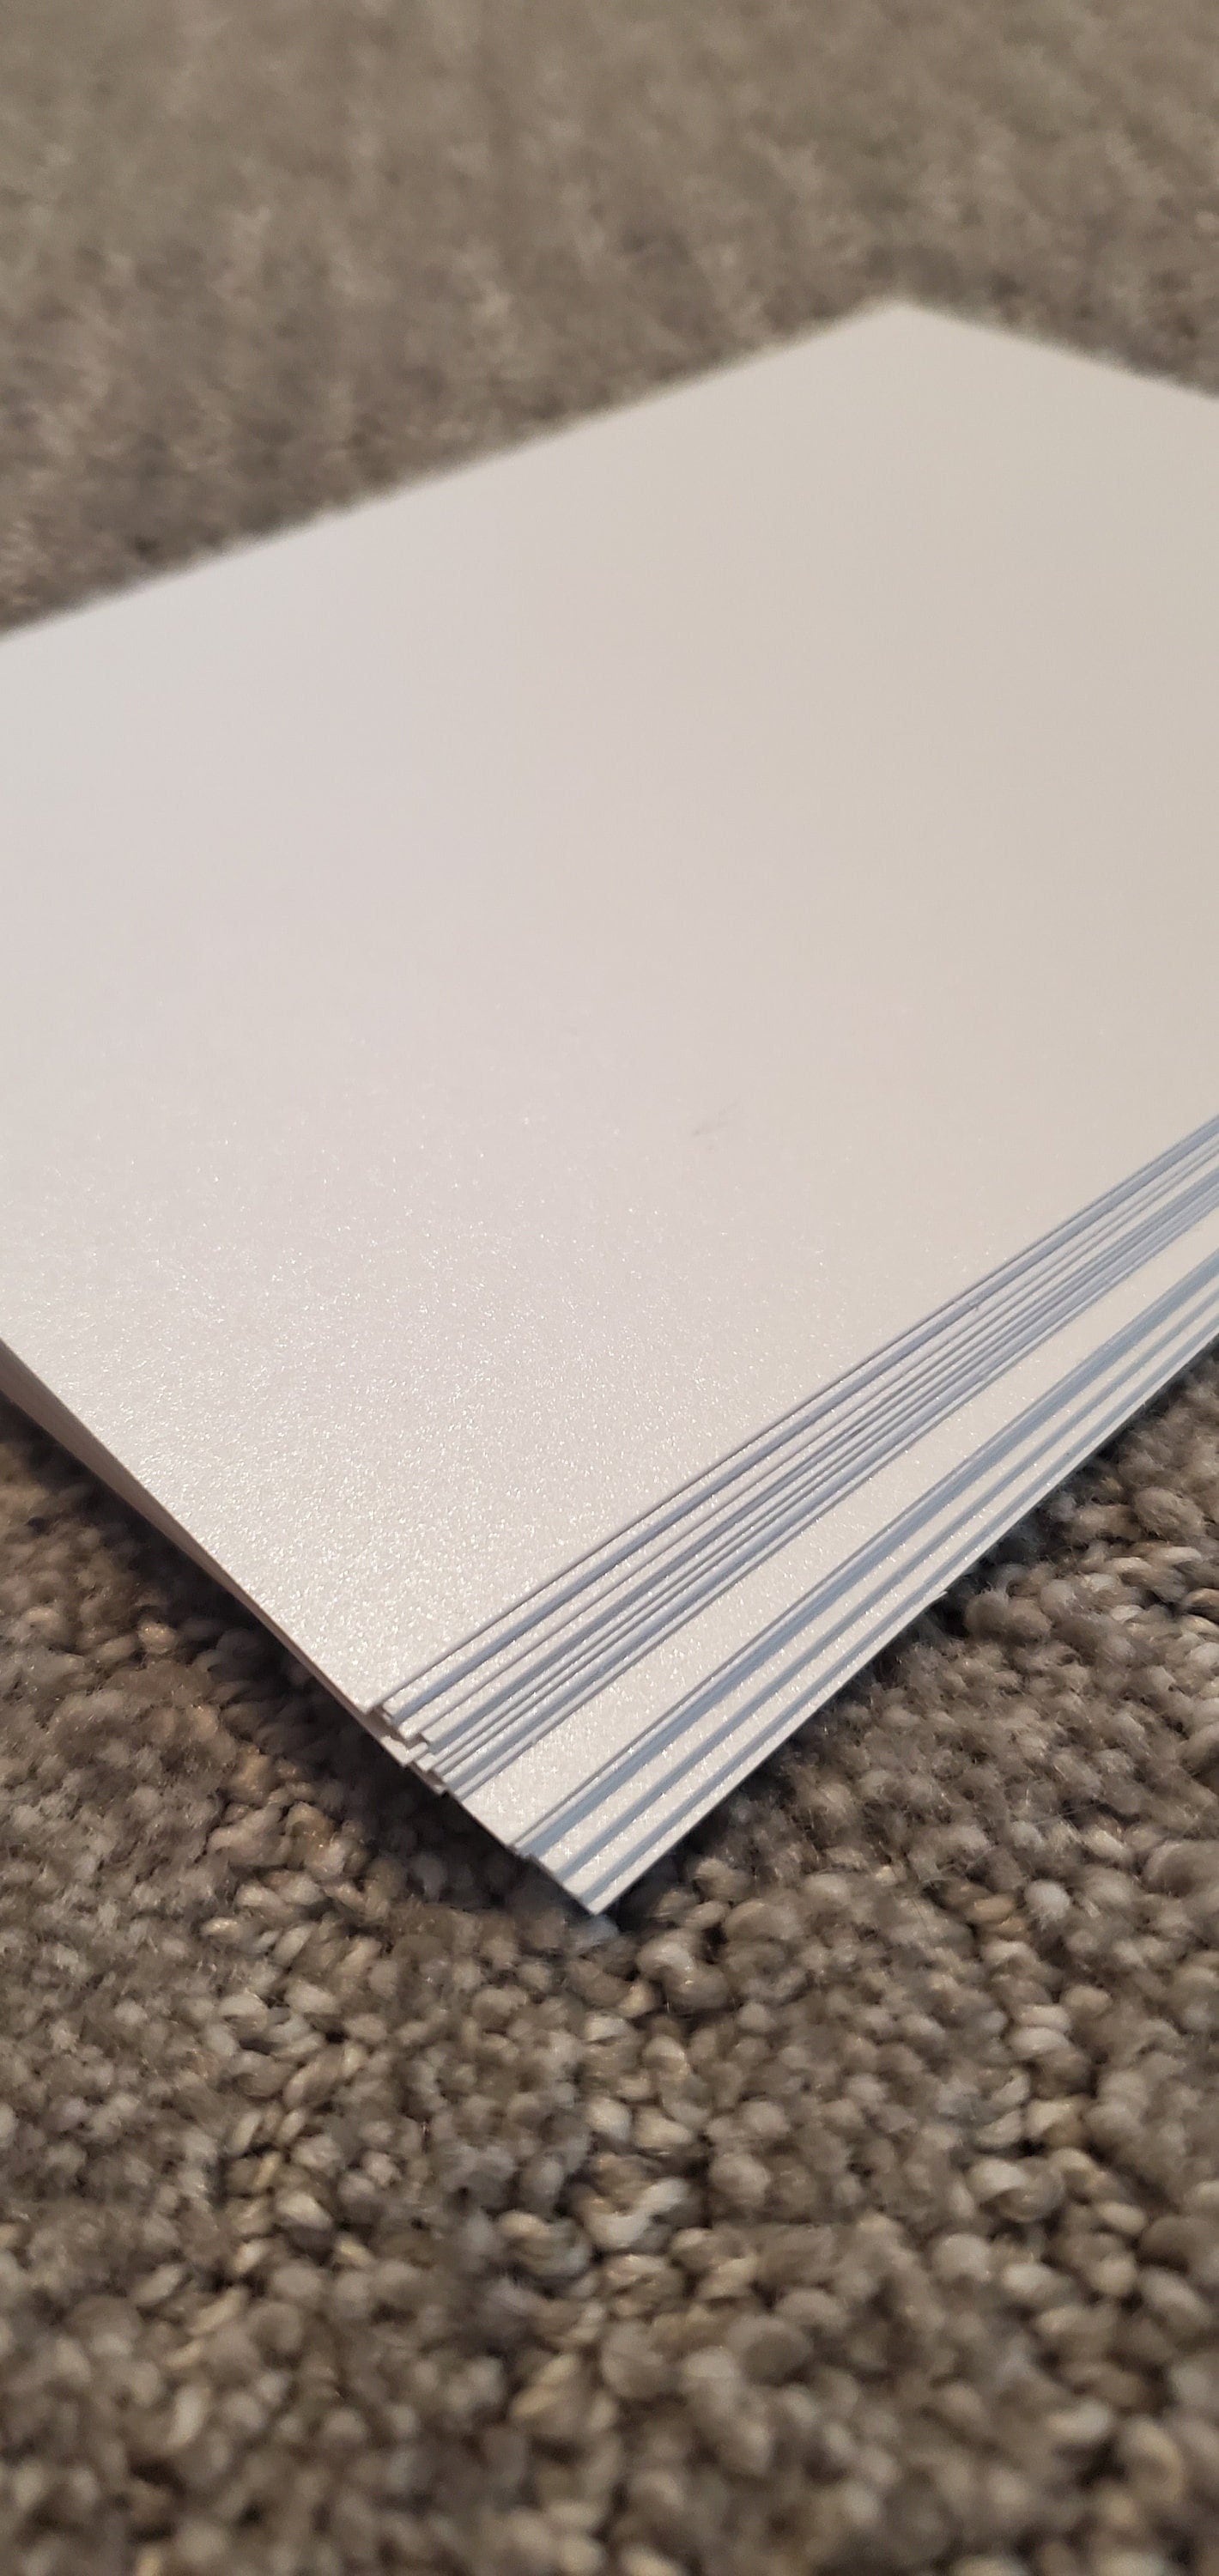 Suede Paper - 8.5x11 - Coconut (white)